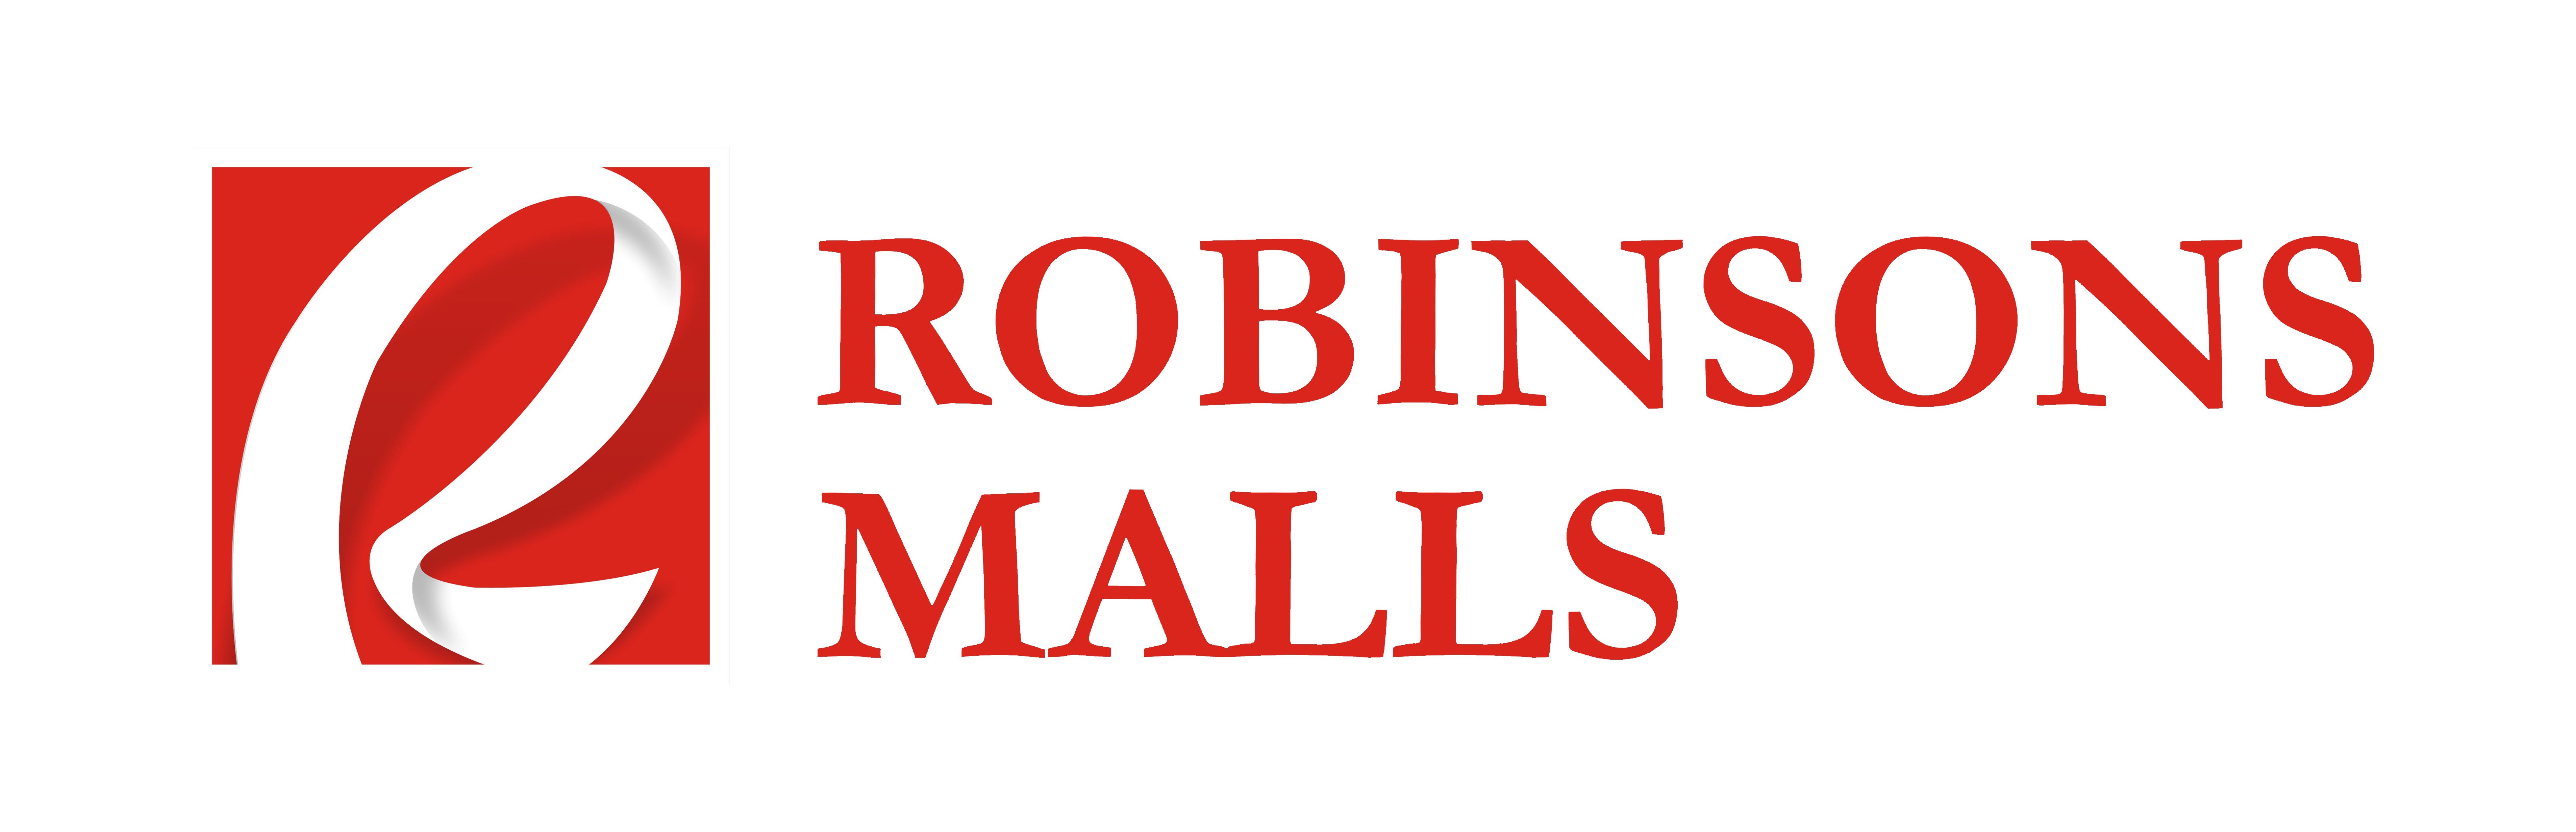 Robinsons_Mall_brand_logo